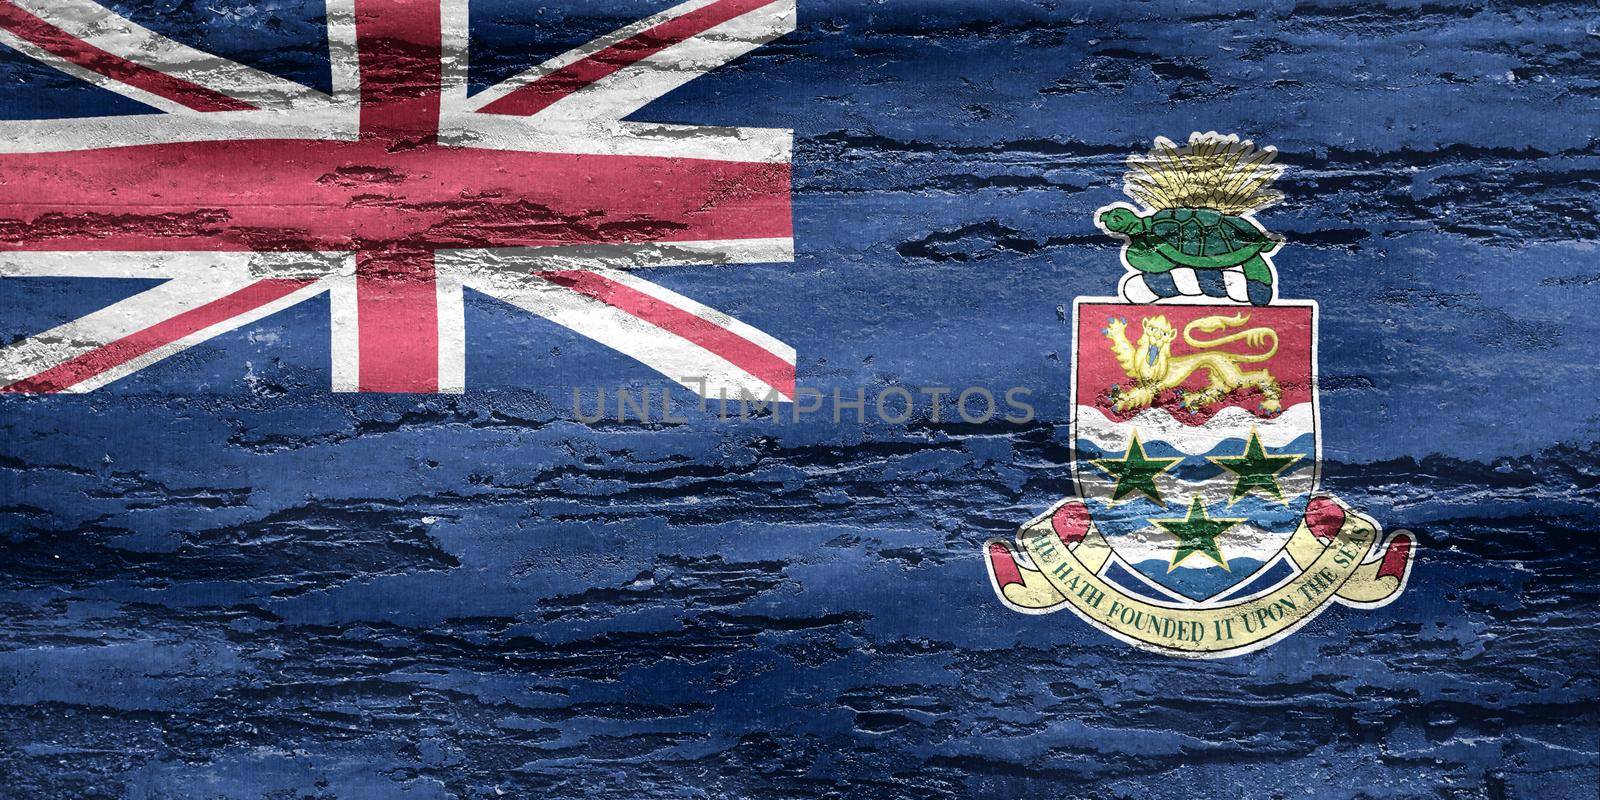 Cayman Islands flag - realistic waving fabric flag